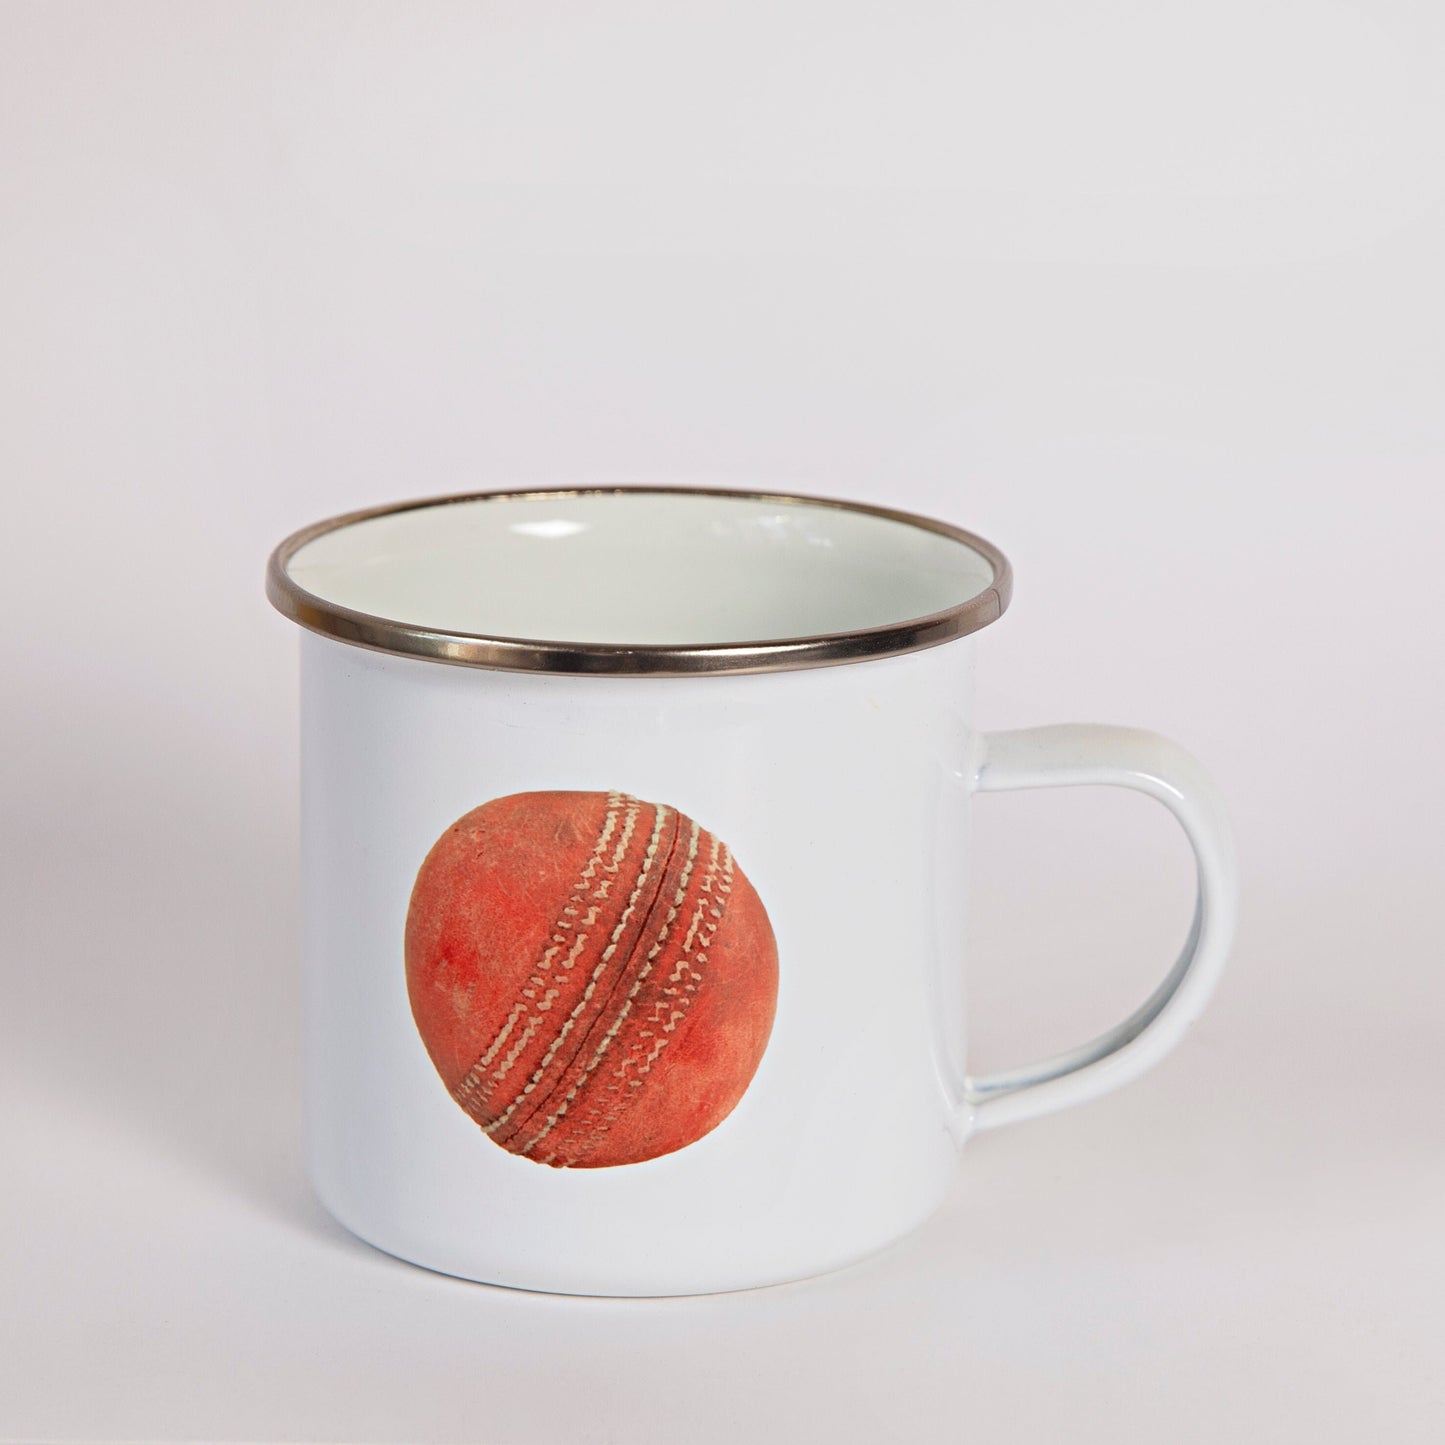 Old ball enamel mug